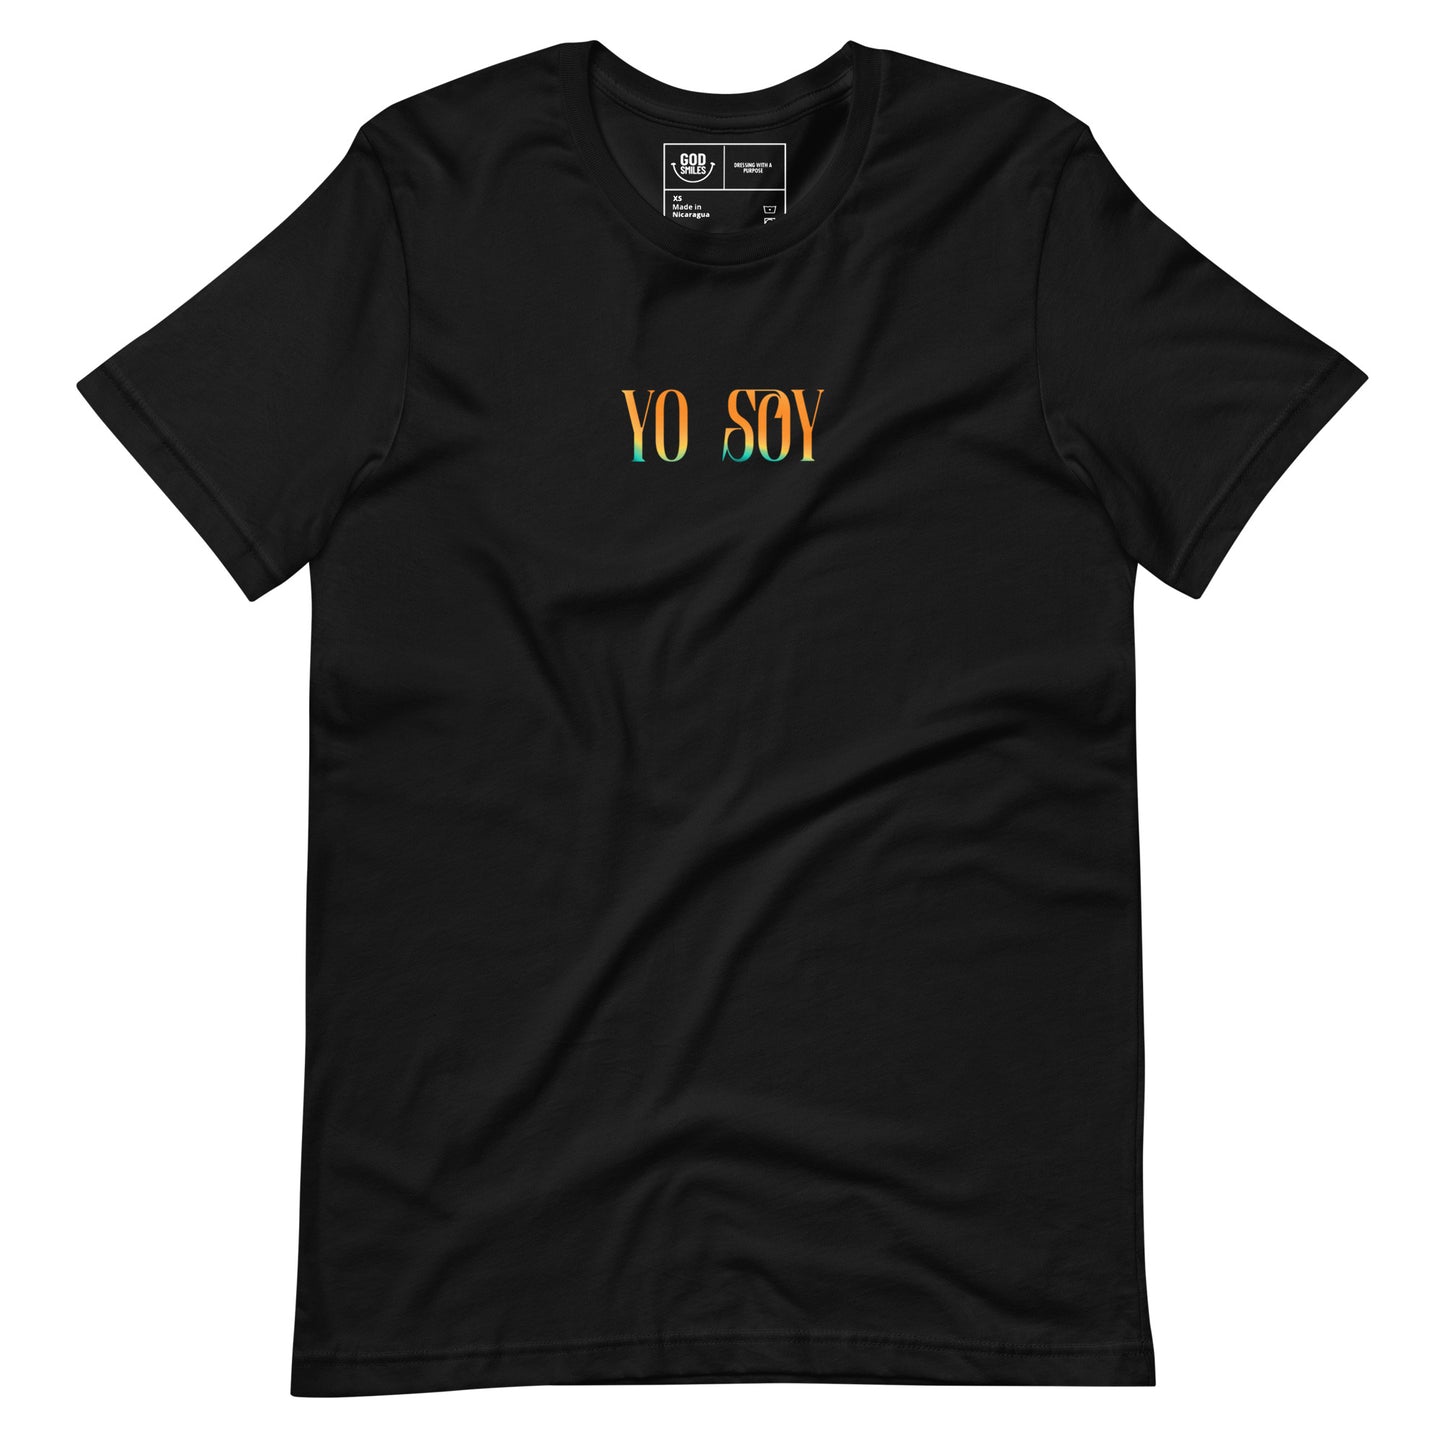 "YO SOY" T-shirt (Spanish)